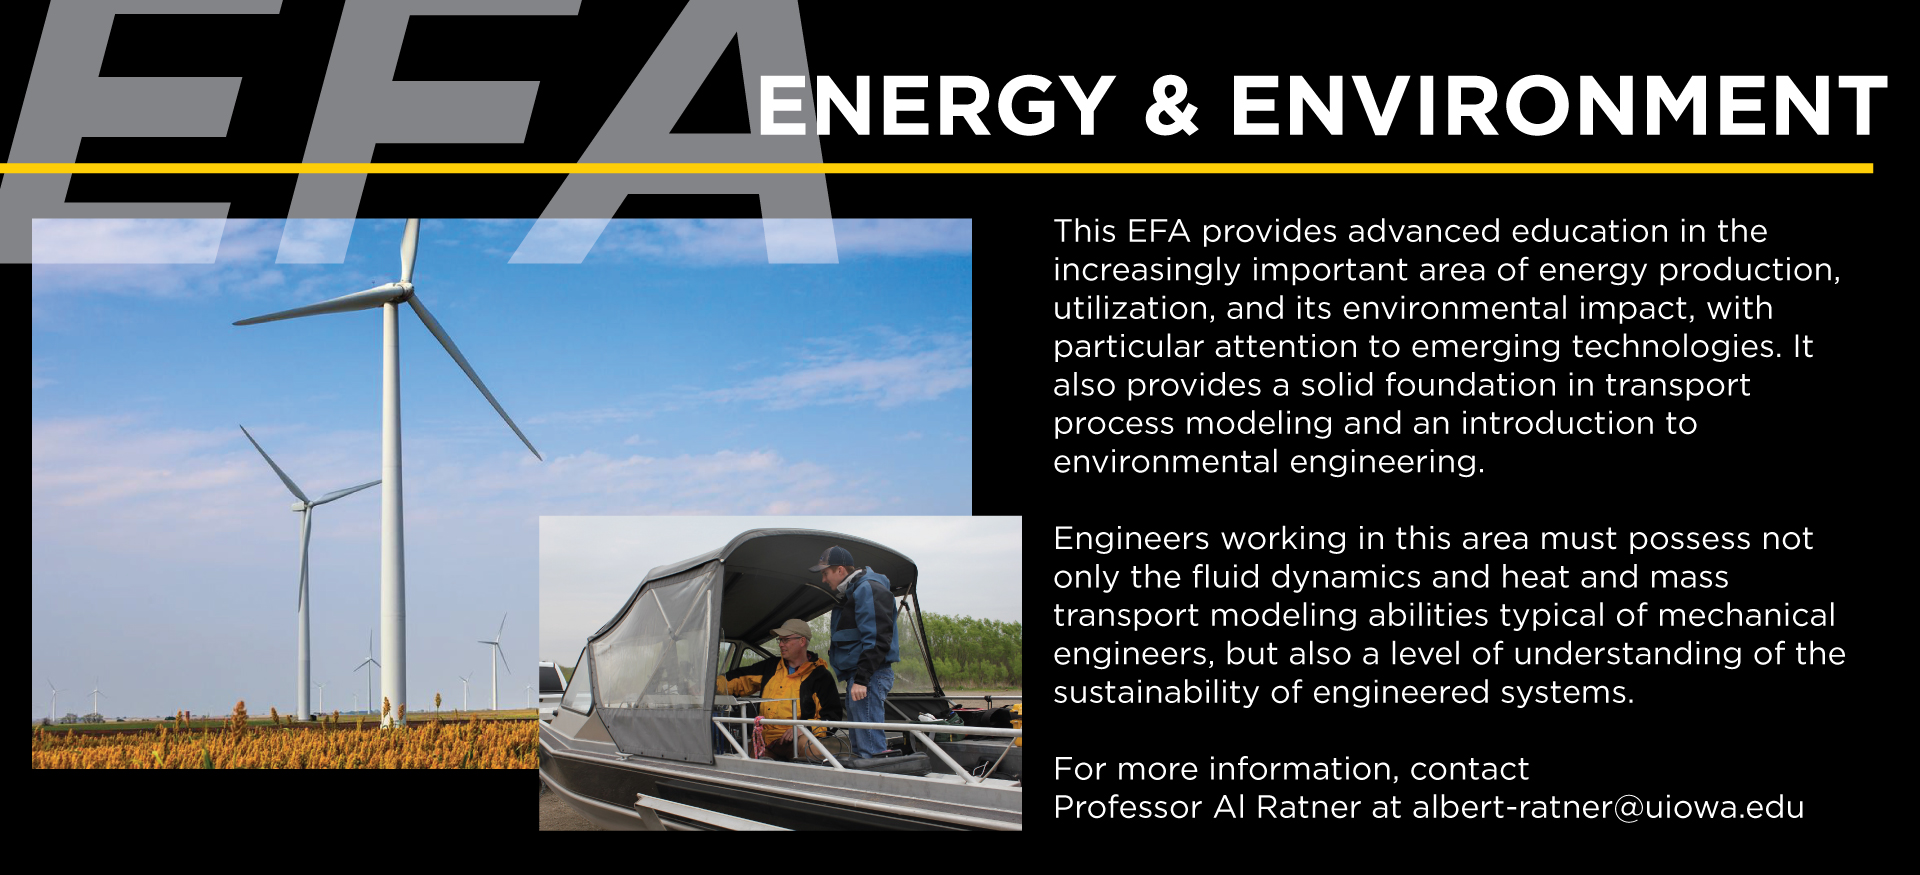 ME energy and environment EFA